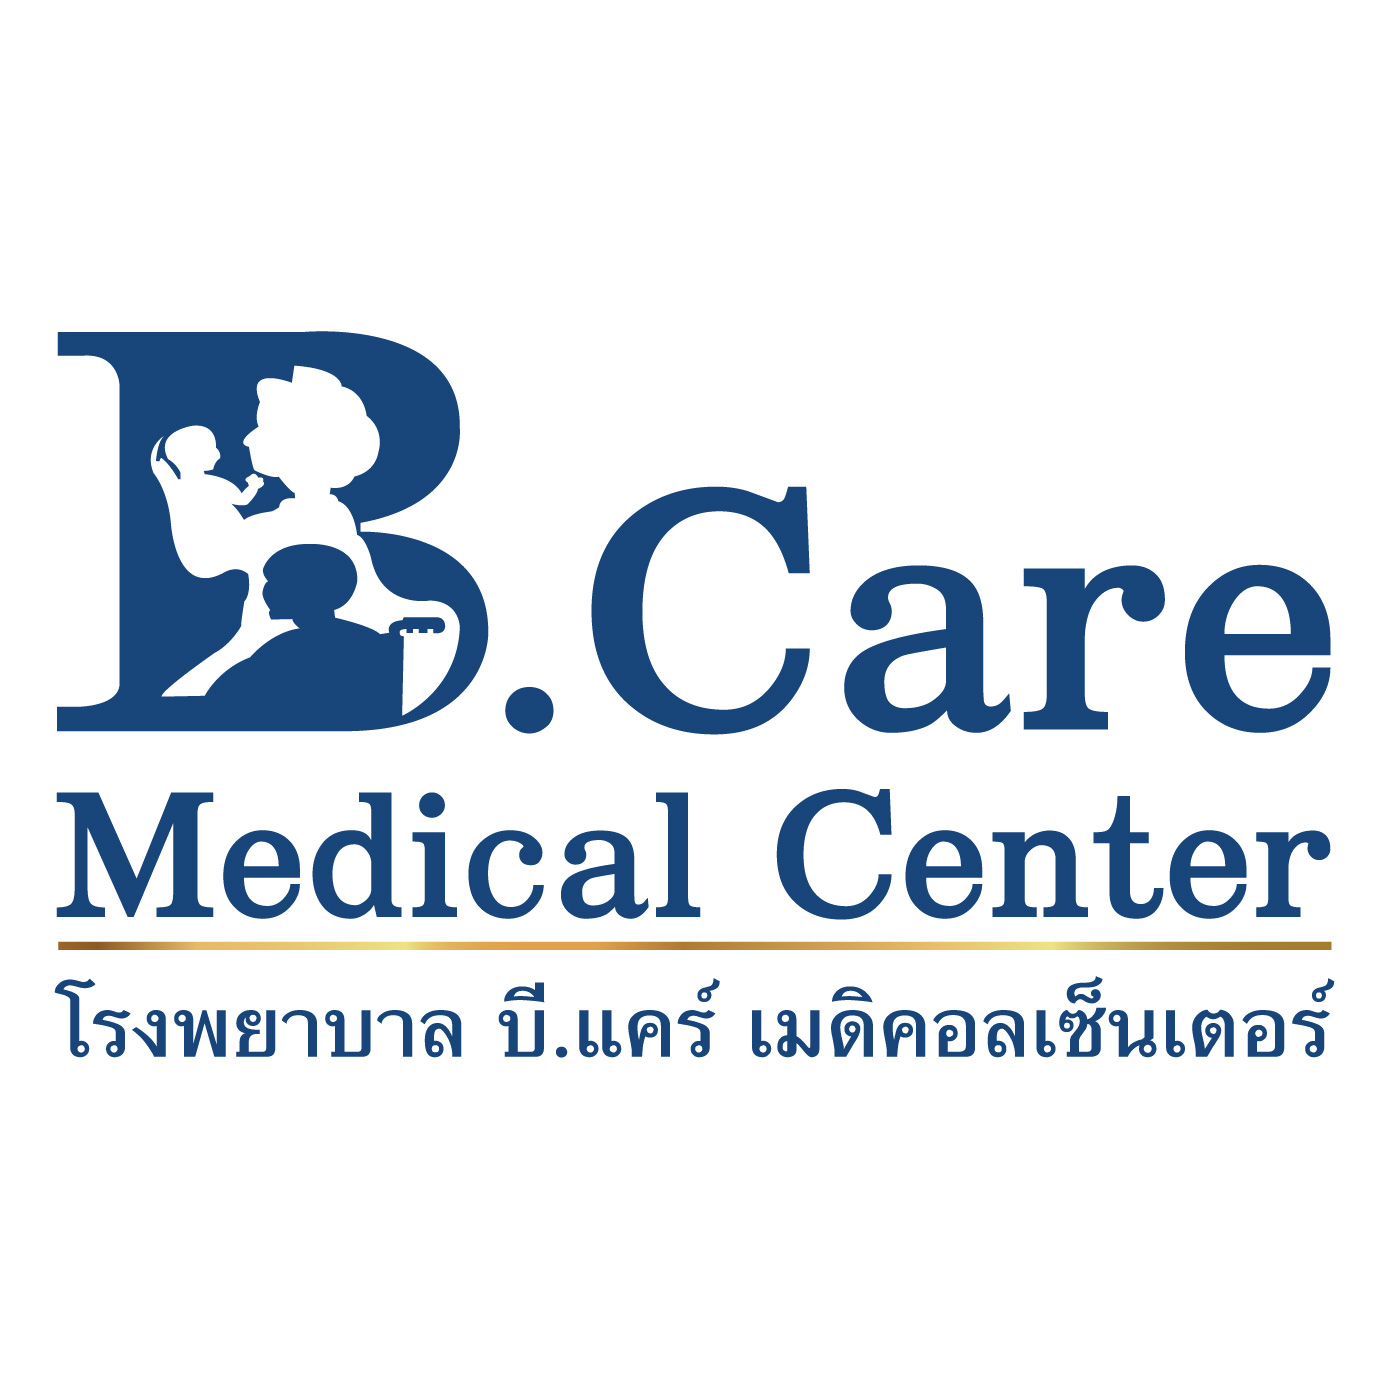 B.care Medical Center 01